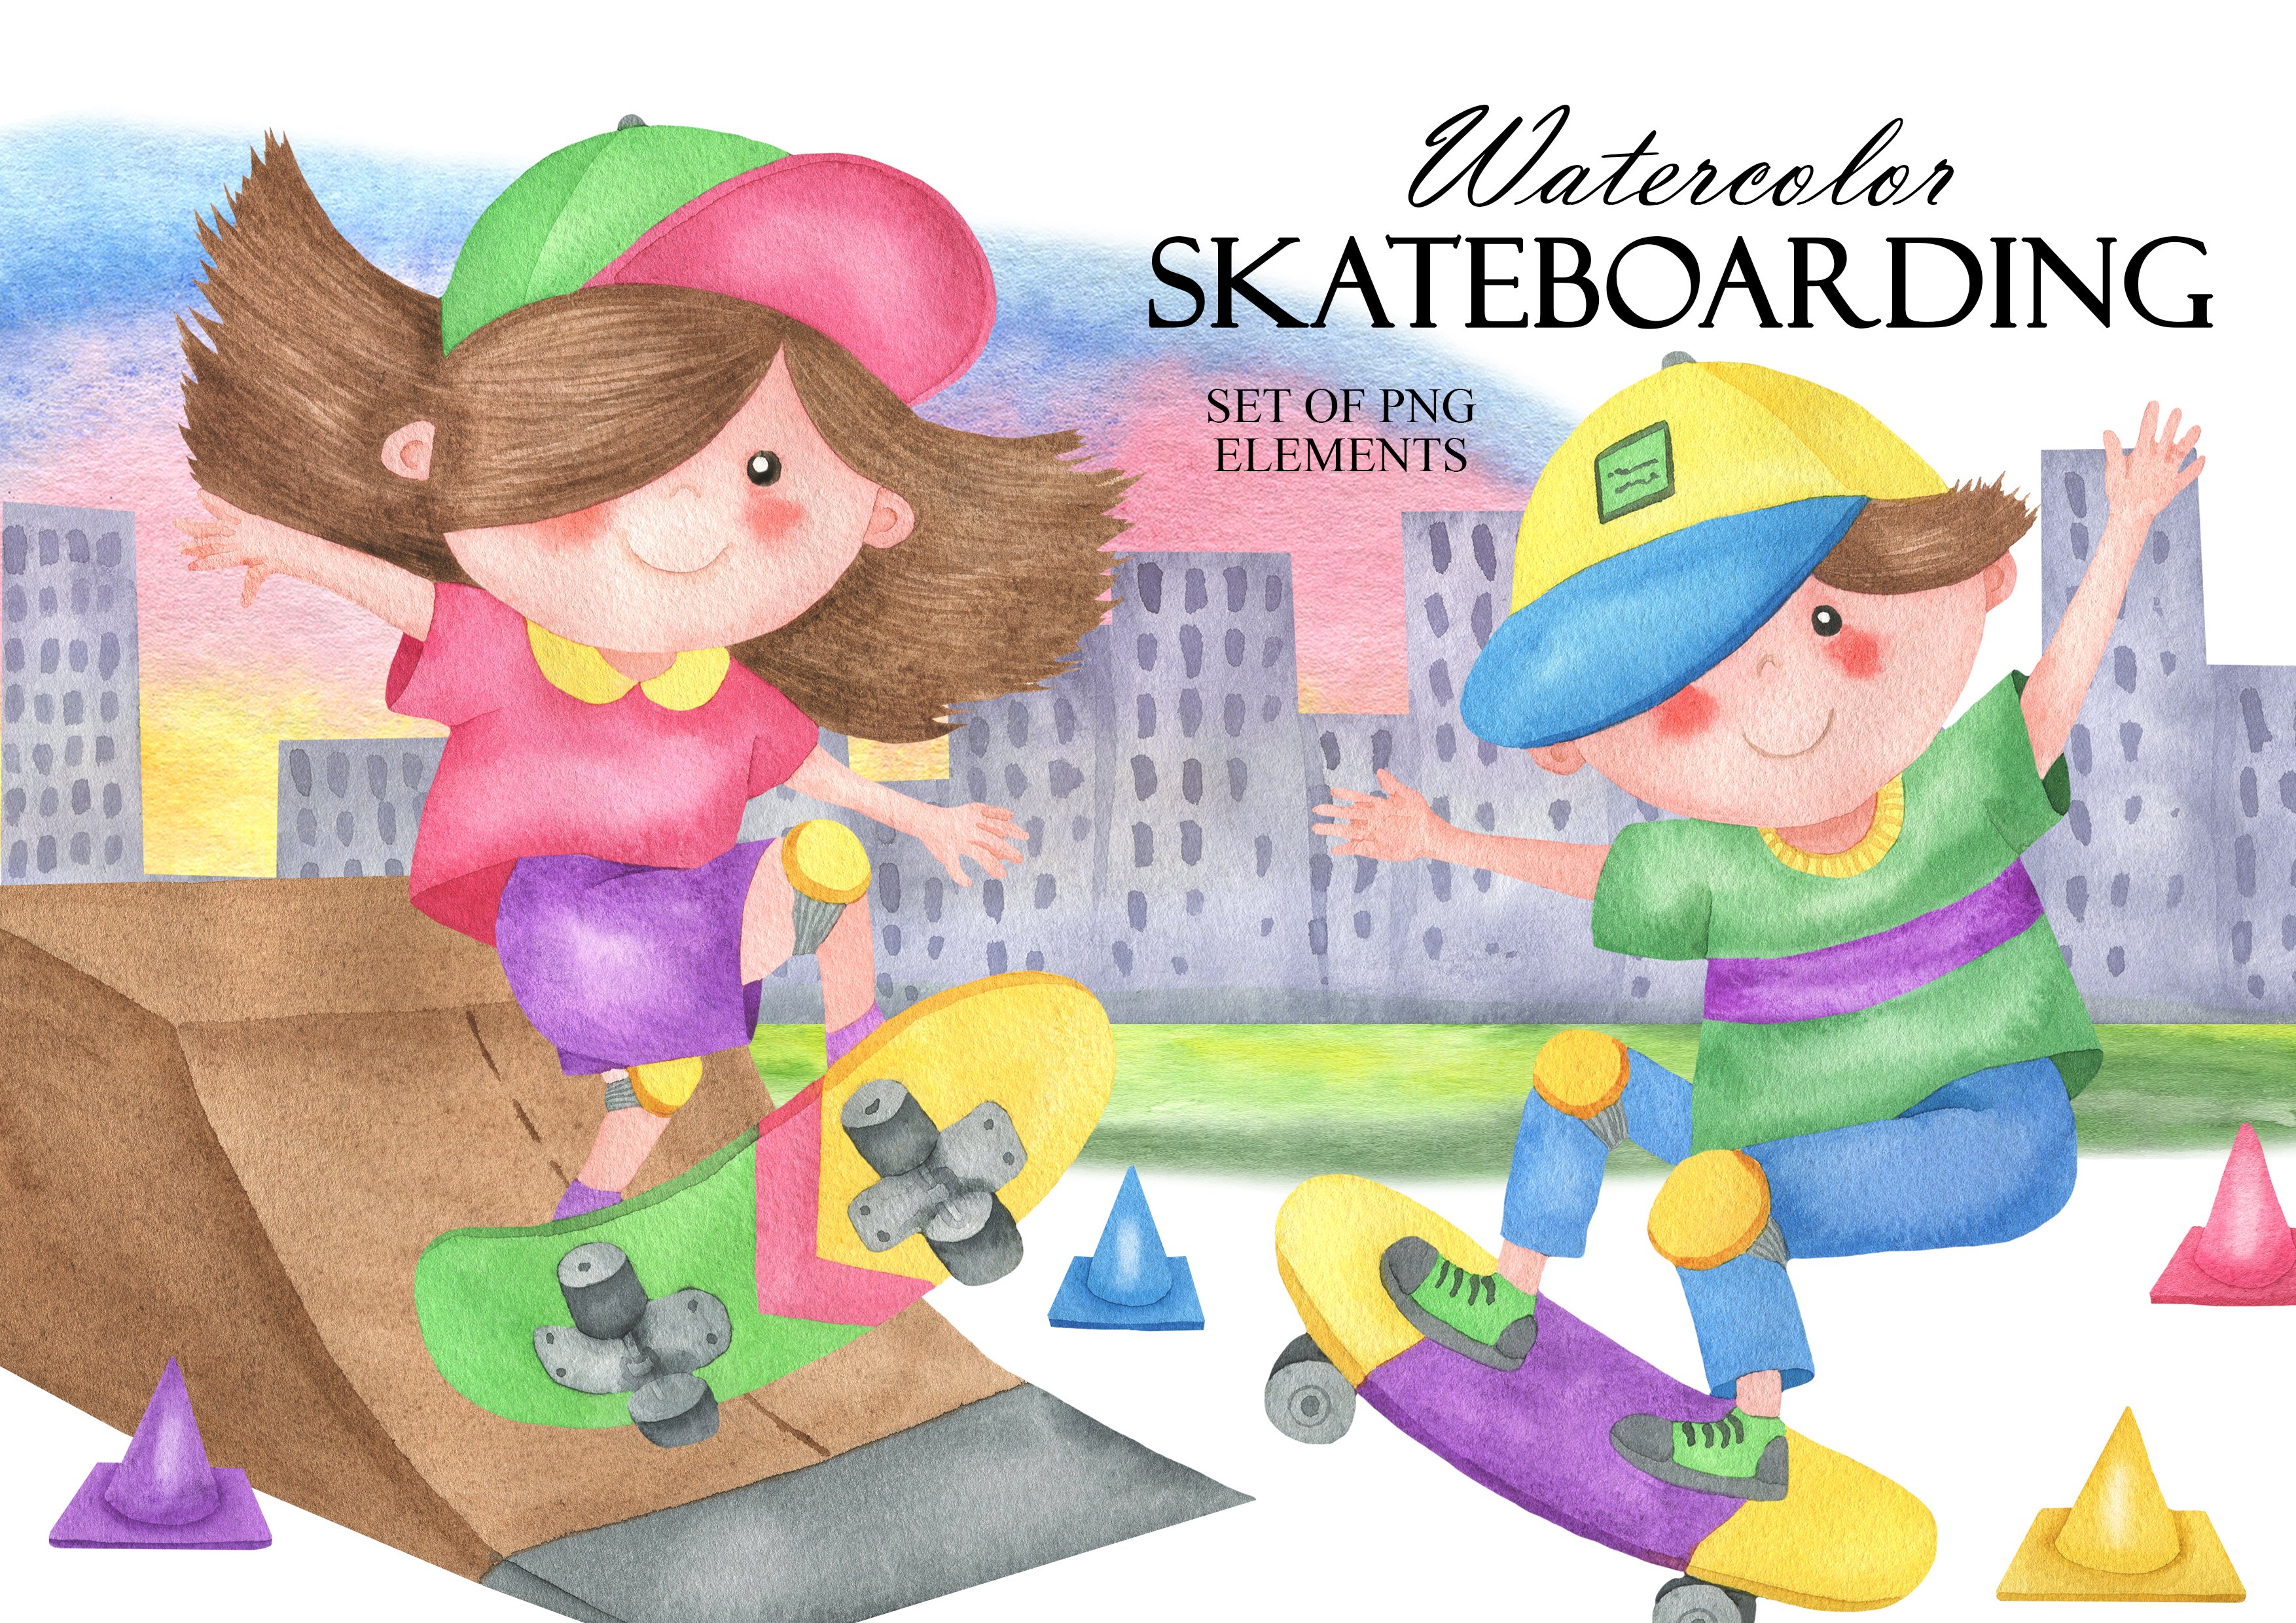 Watercolor Skateboarding cover image.